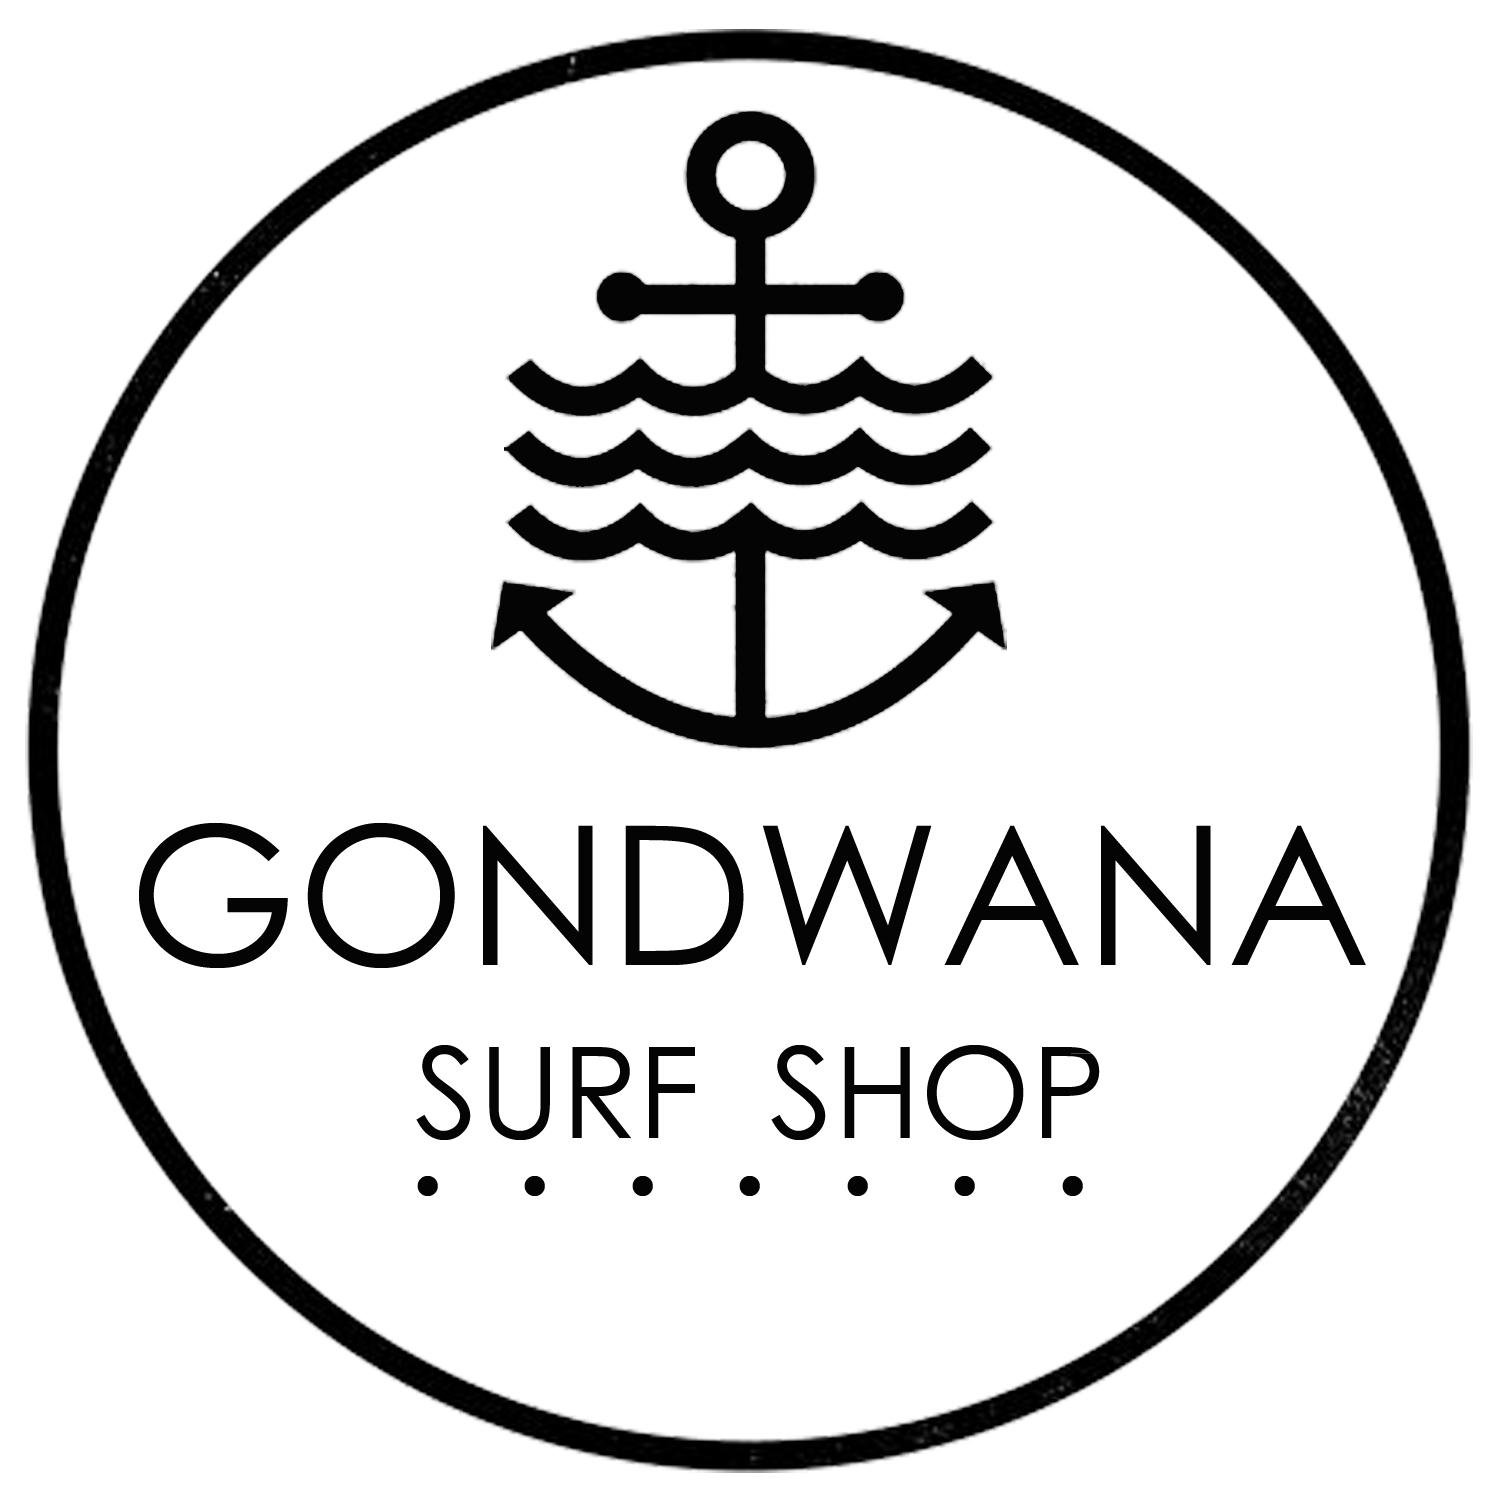 Gondwana Surf Shop